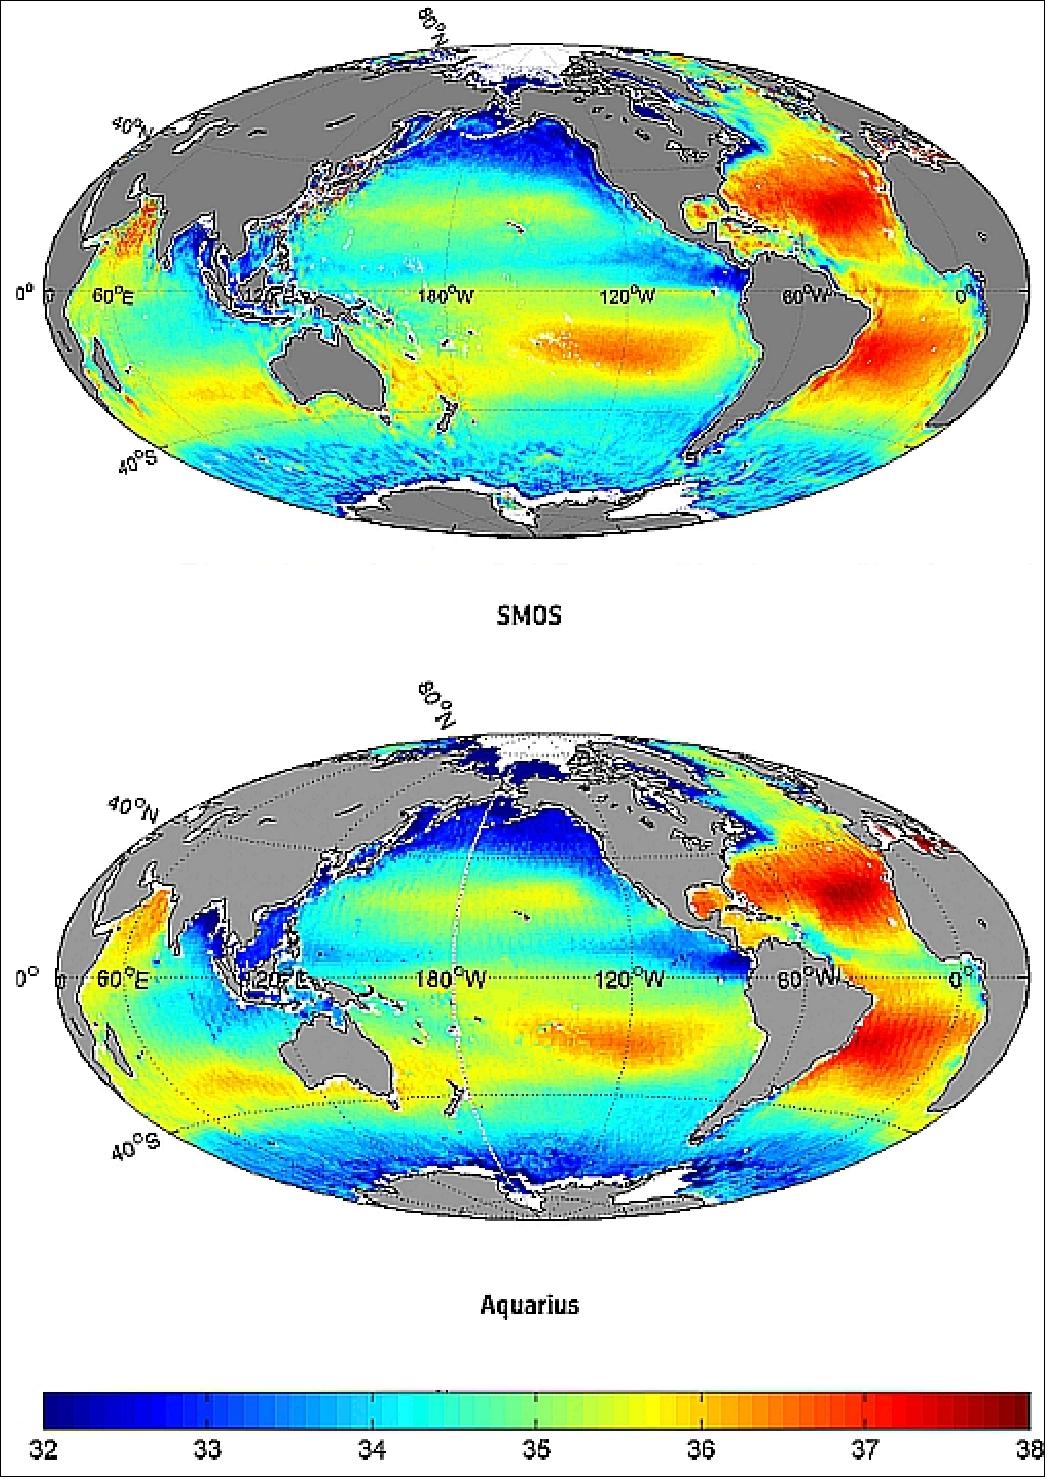 Figure 69: Global salinity maps from SMOS (top) and Aquarius (bottom), image credit: IFREMER, ESR, ESA, NASA